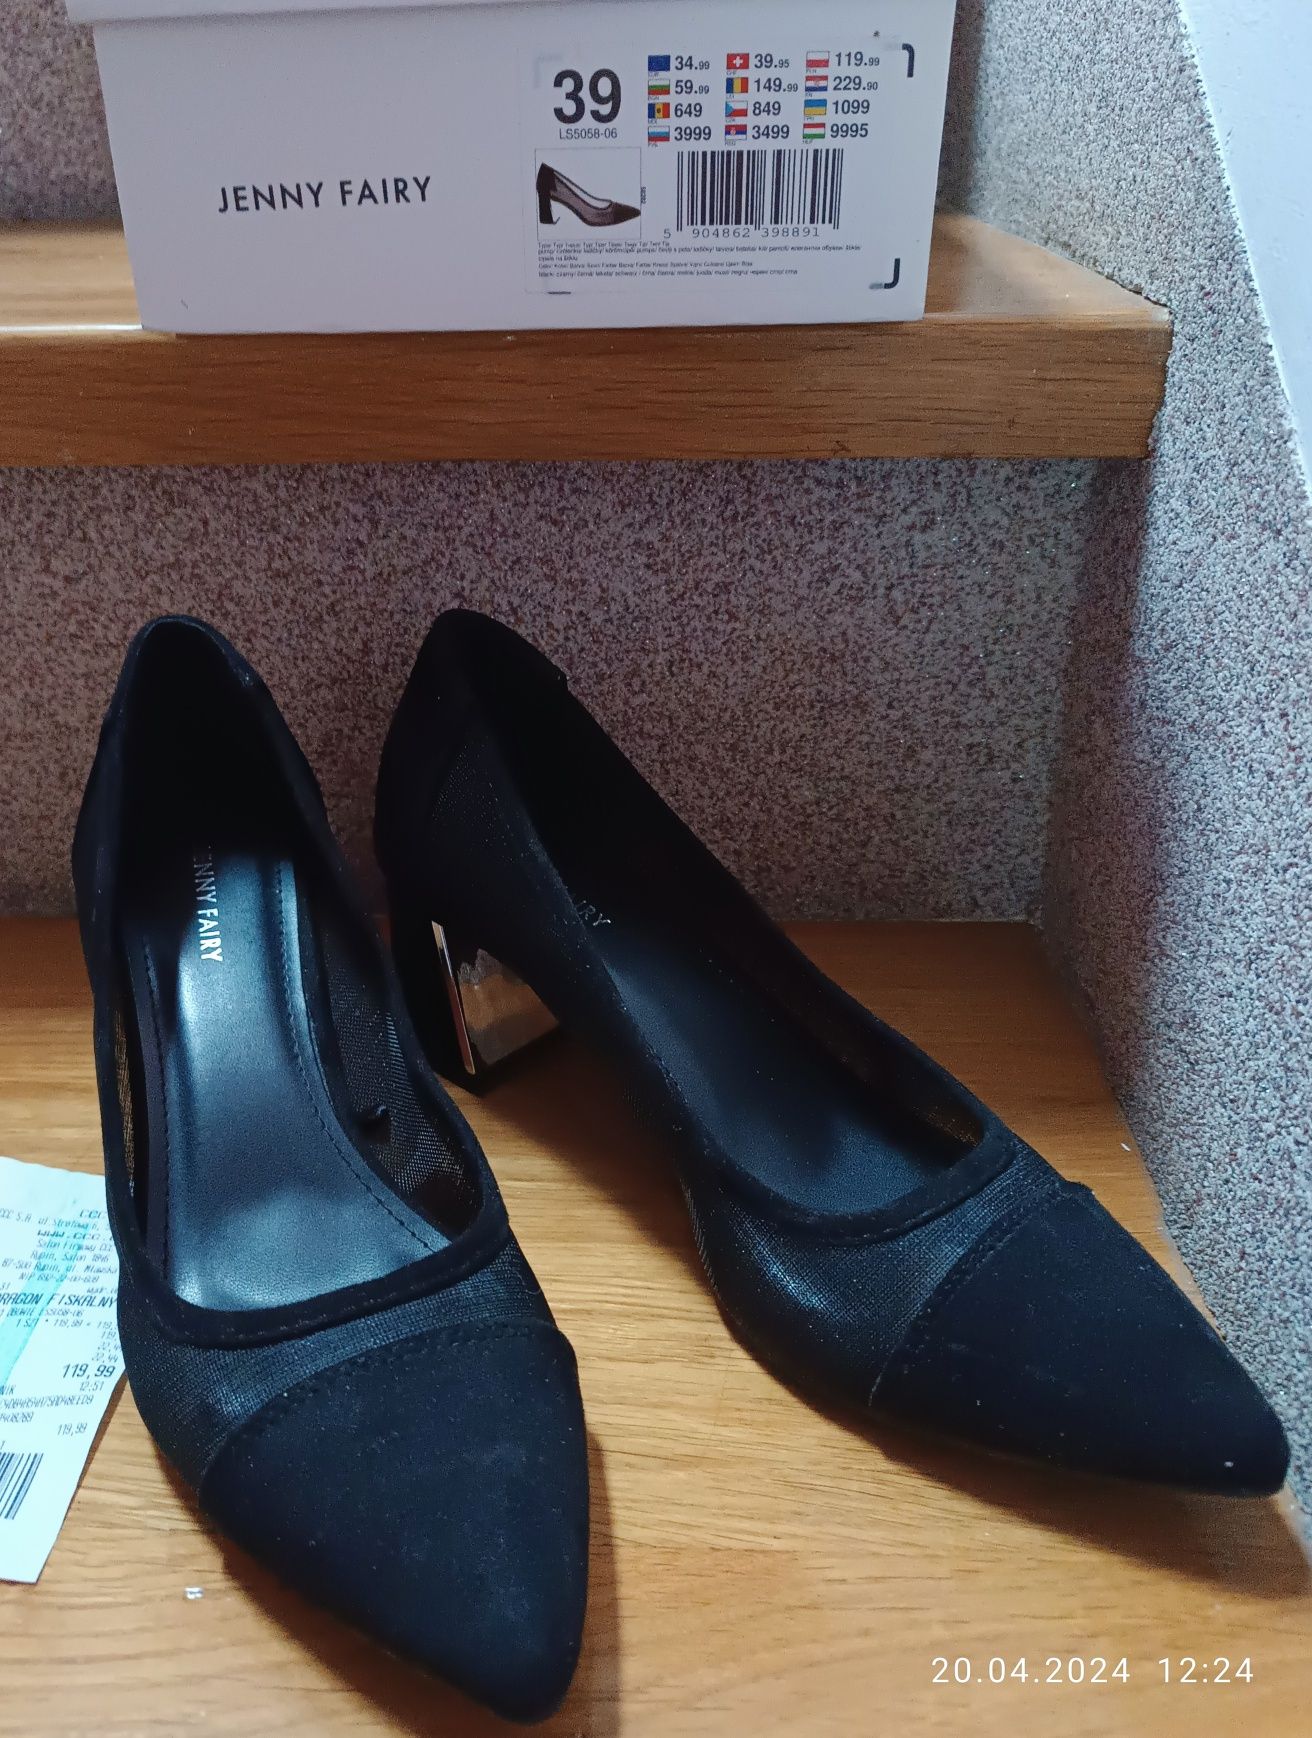 Pantofle, buty Jenny Fairy 39/24,5cm jak nowe